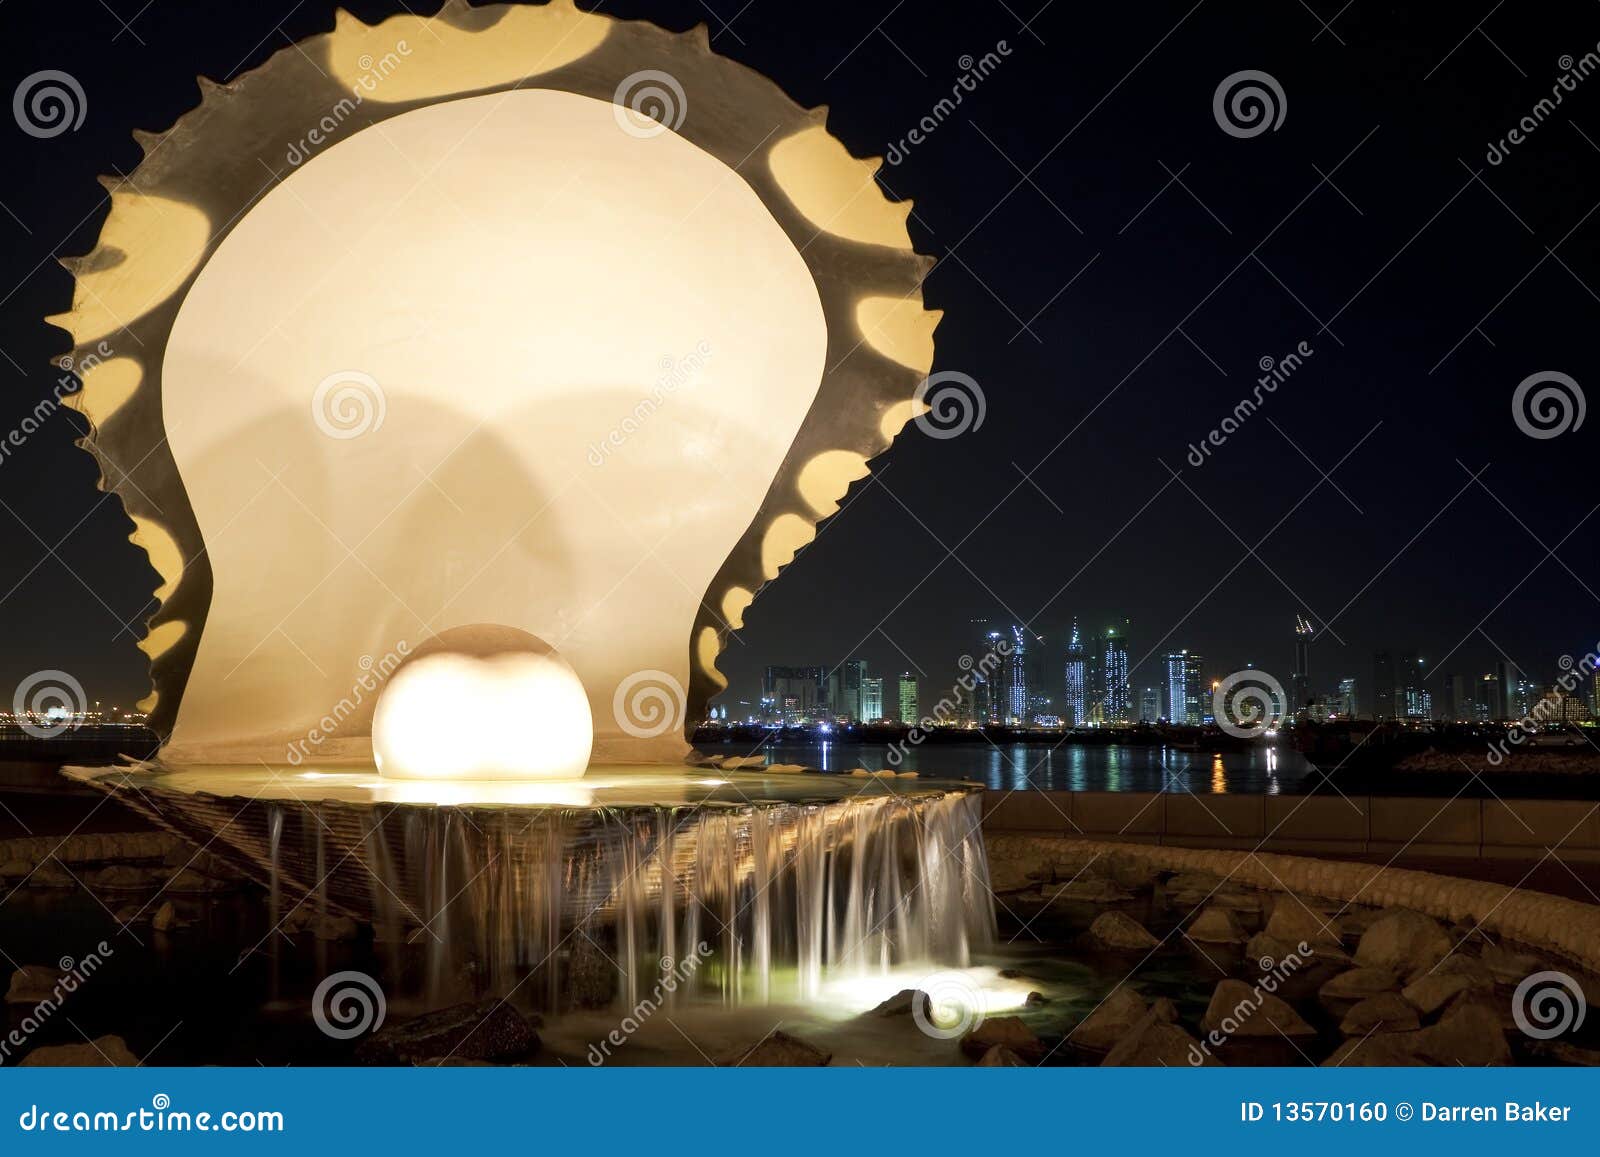 pearl & oyster, corniche, doha, qatar at night